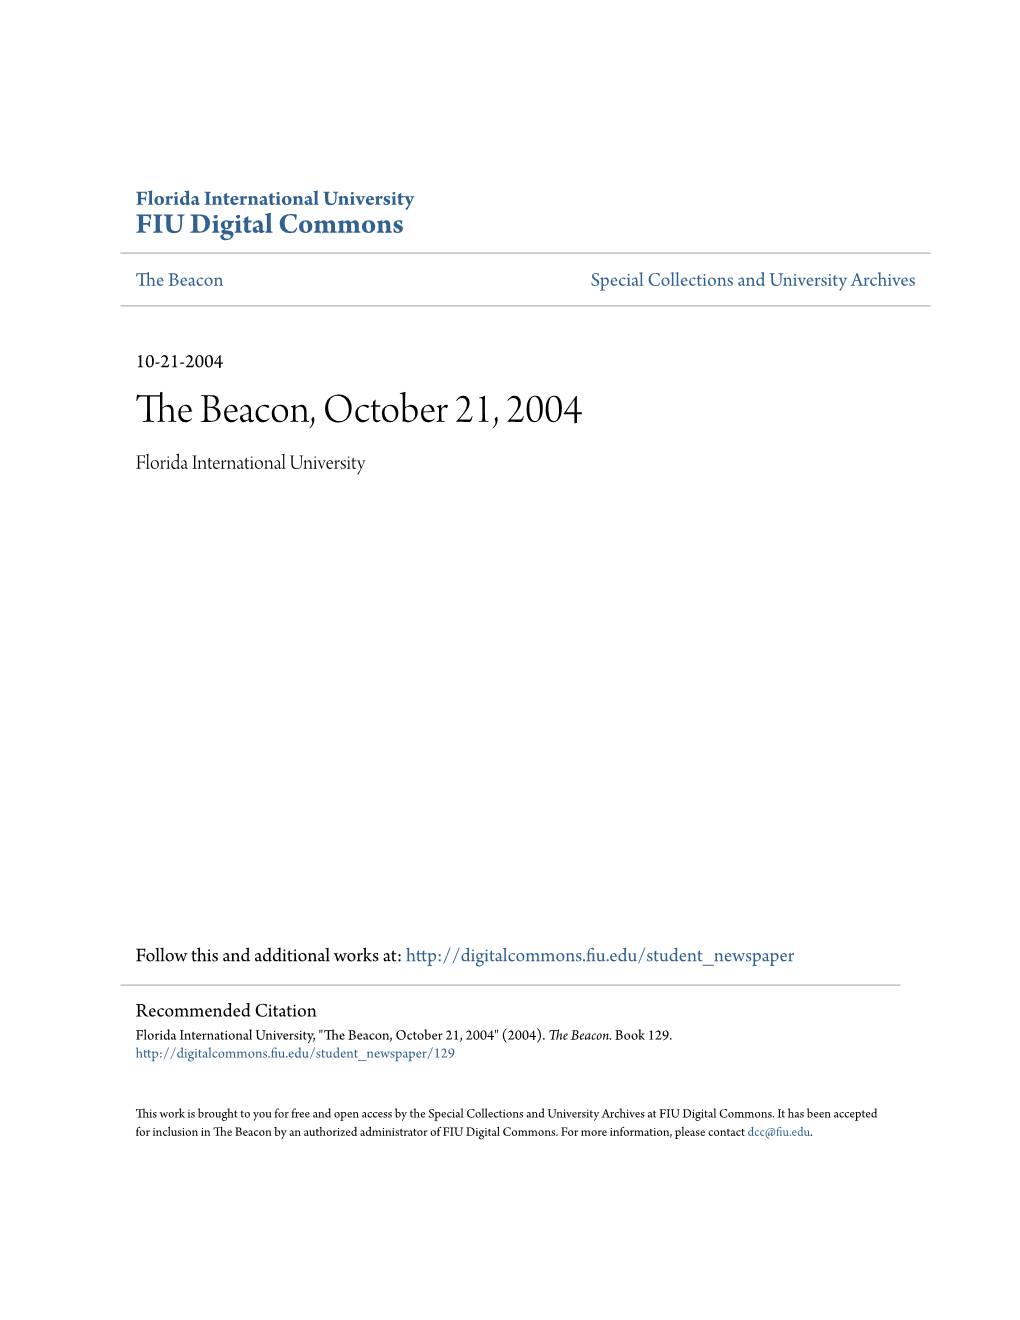 The Beacon, October 21, 2004 Florida International University